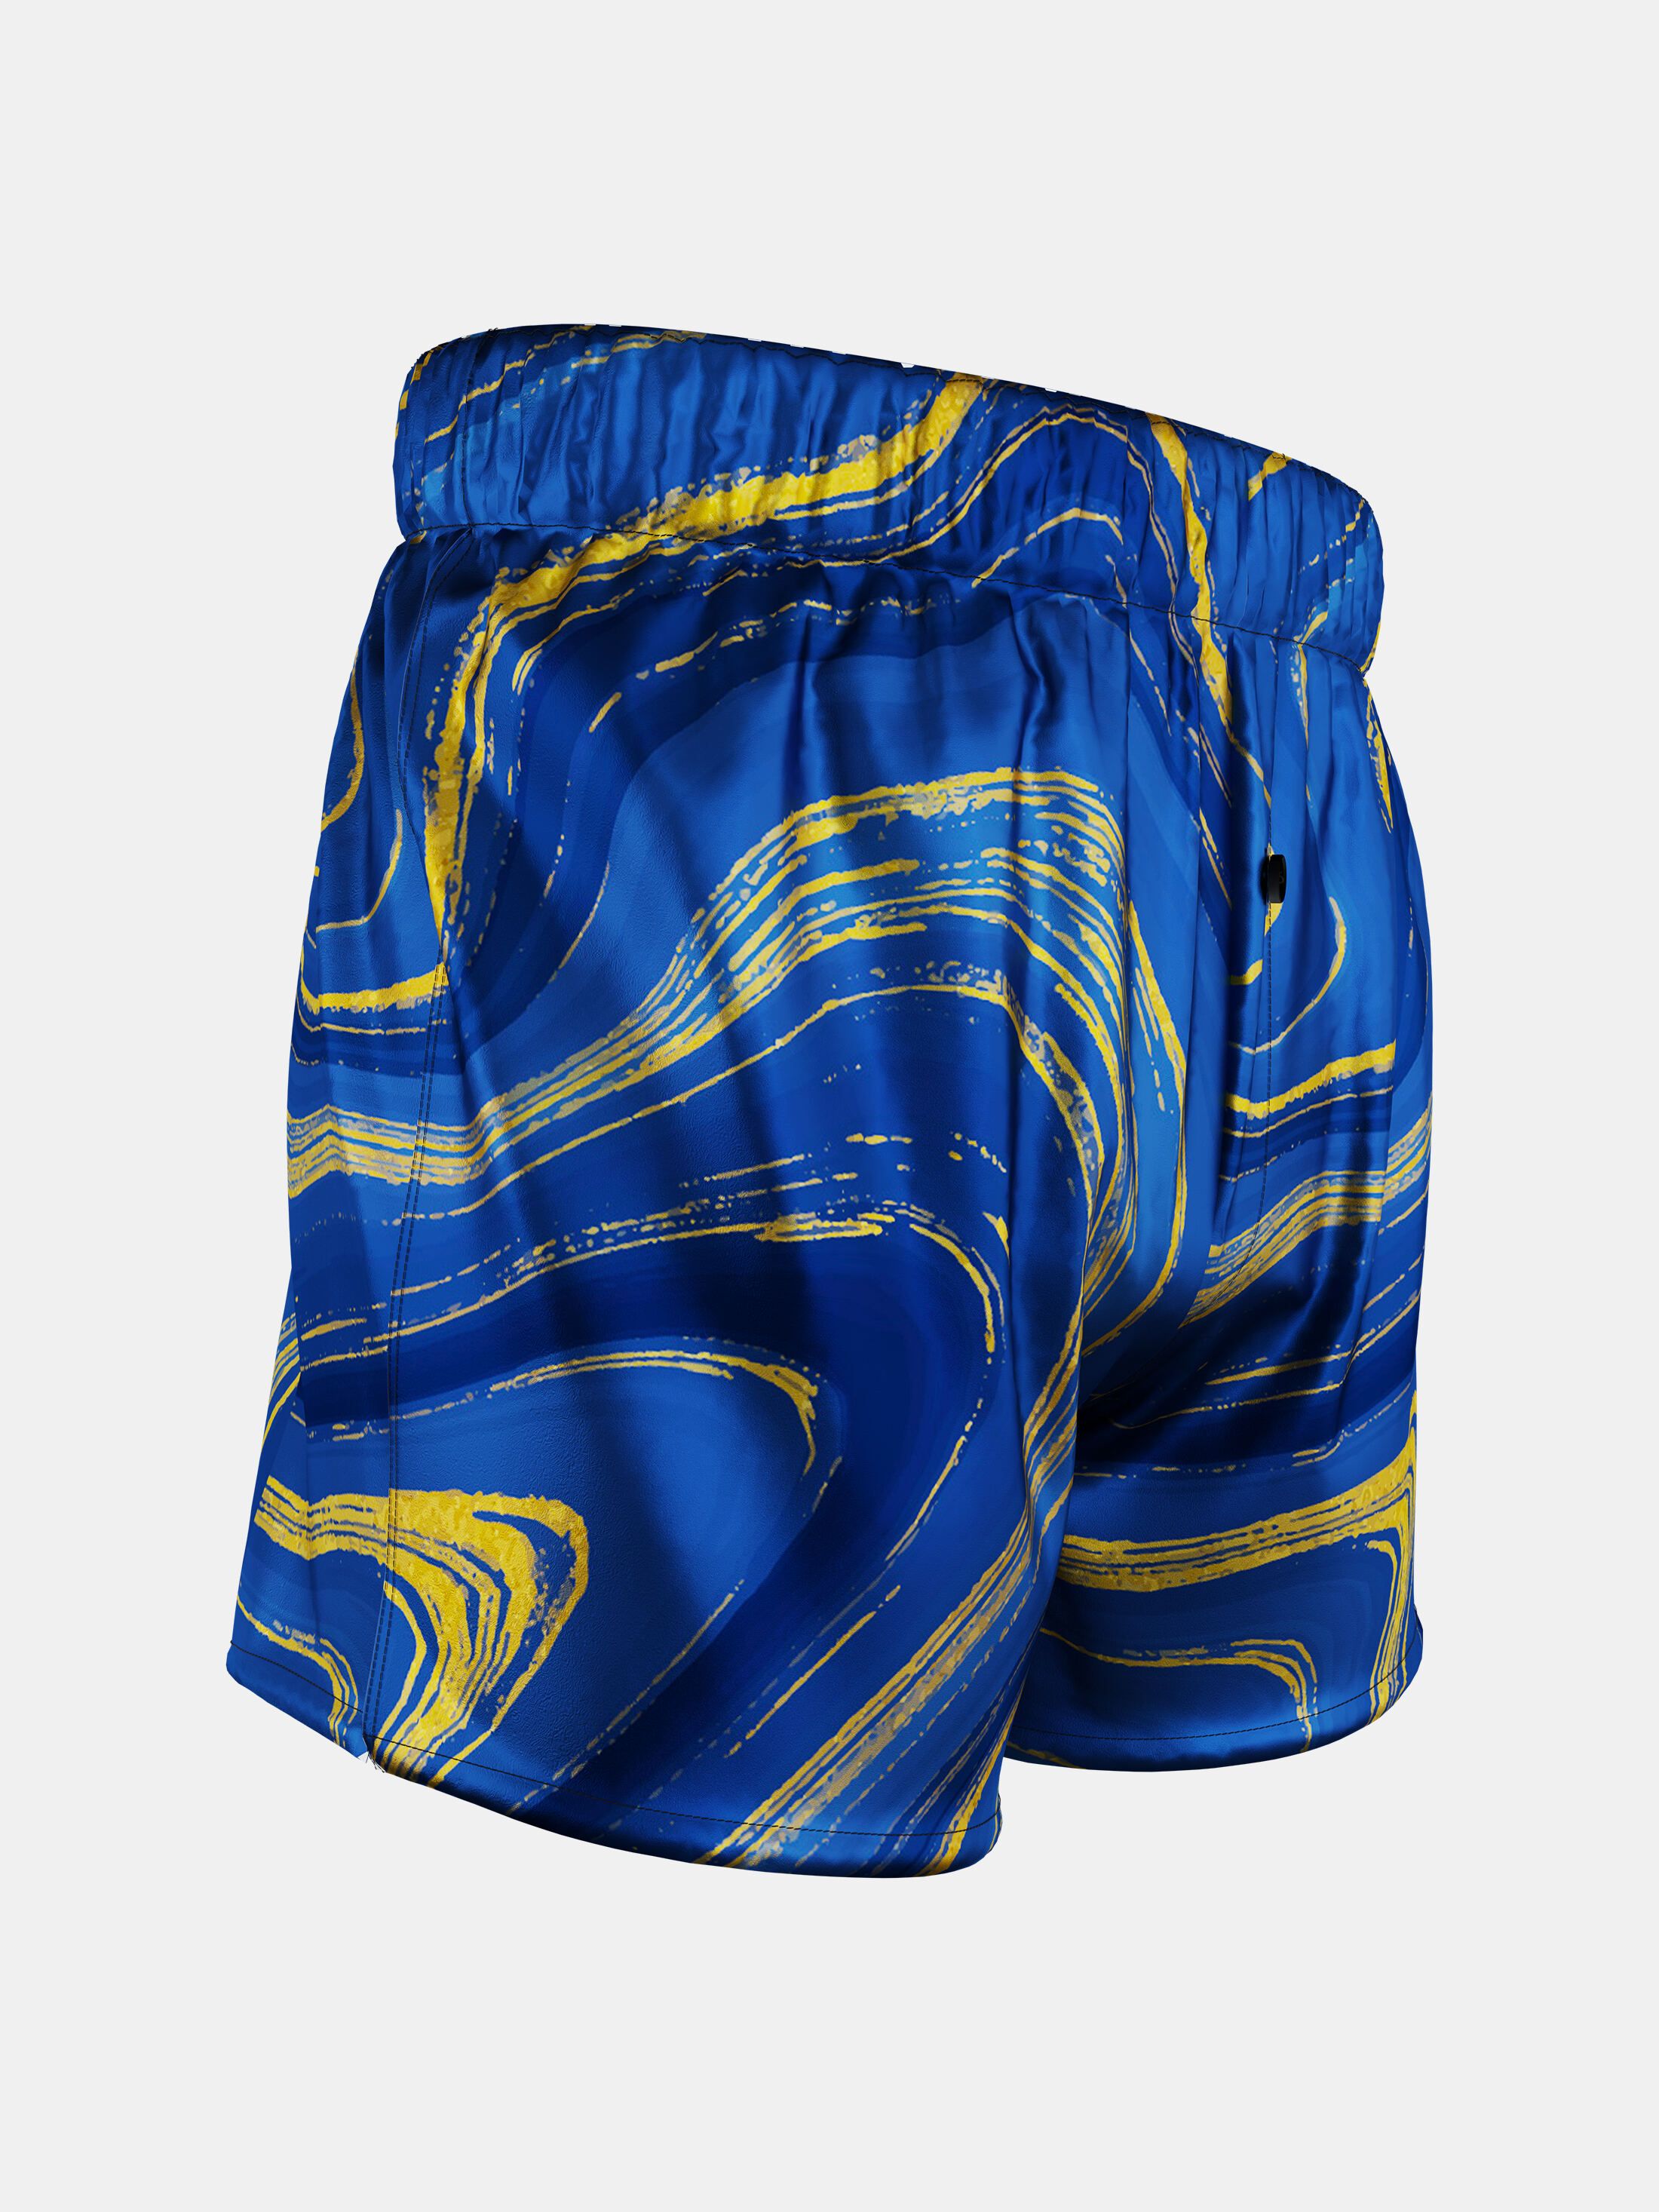 Create your own custom men's boxer shorts